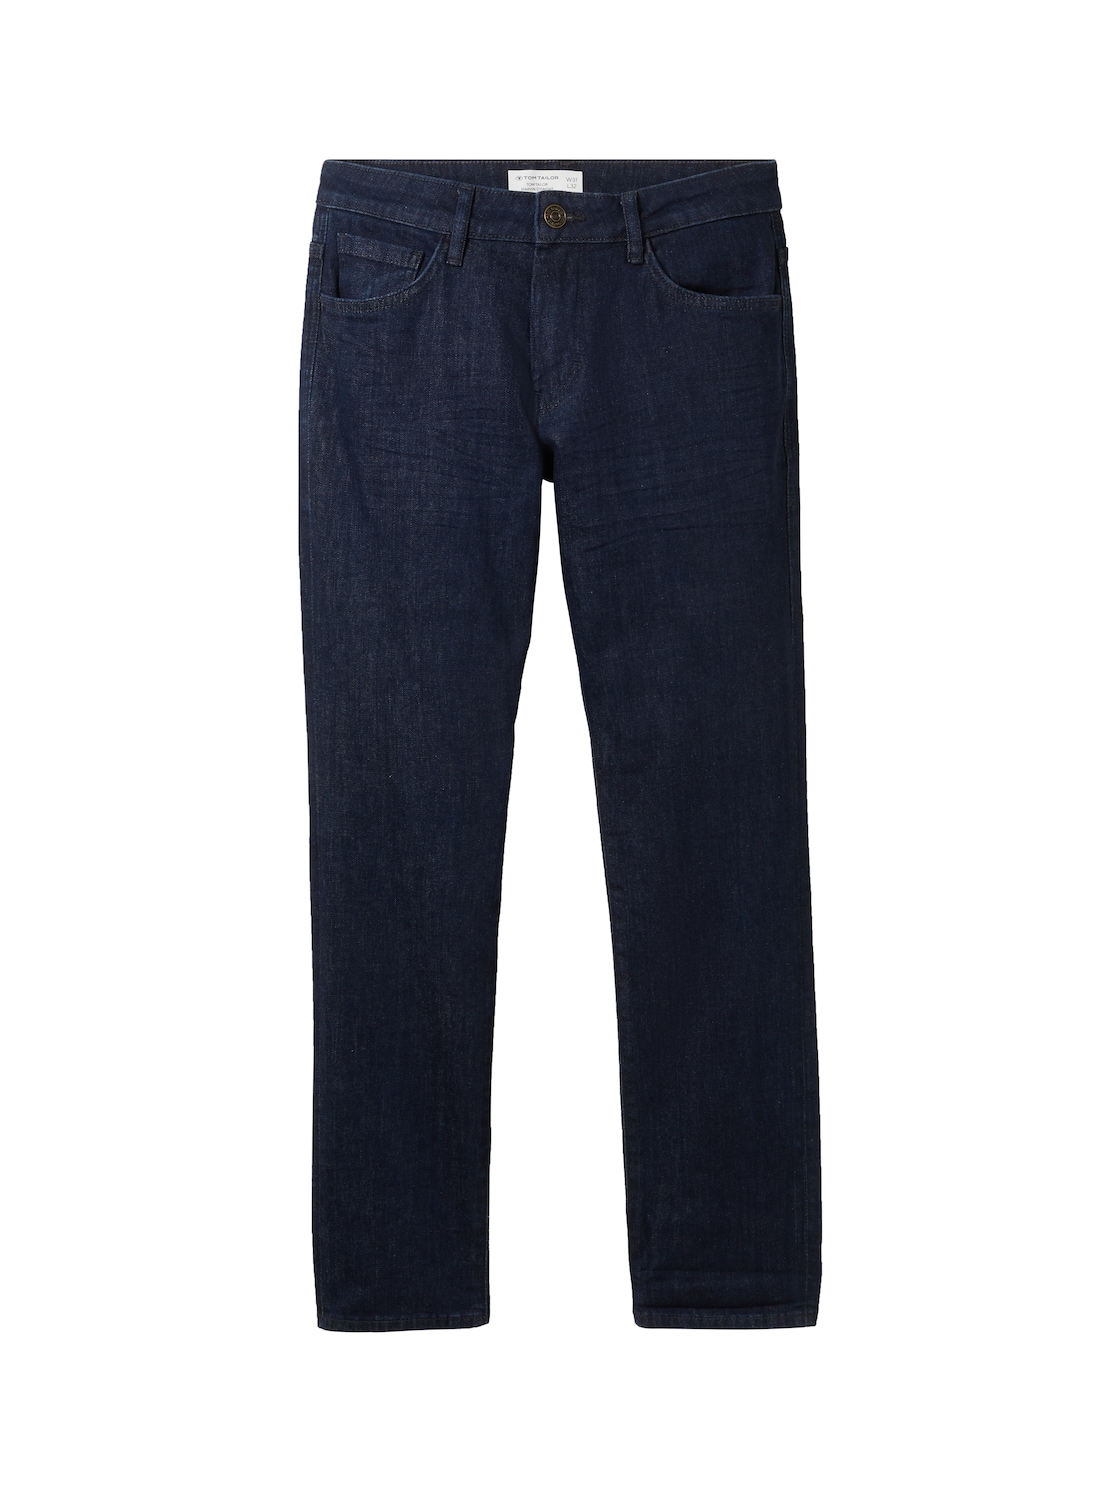 TOM TAILOR Herren Marvin Straight Jeans, blau, Uni, Gr. 30/34 von Tom Tailor